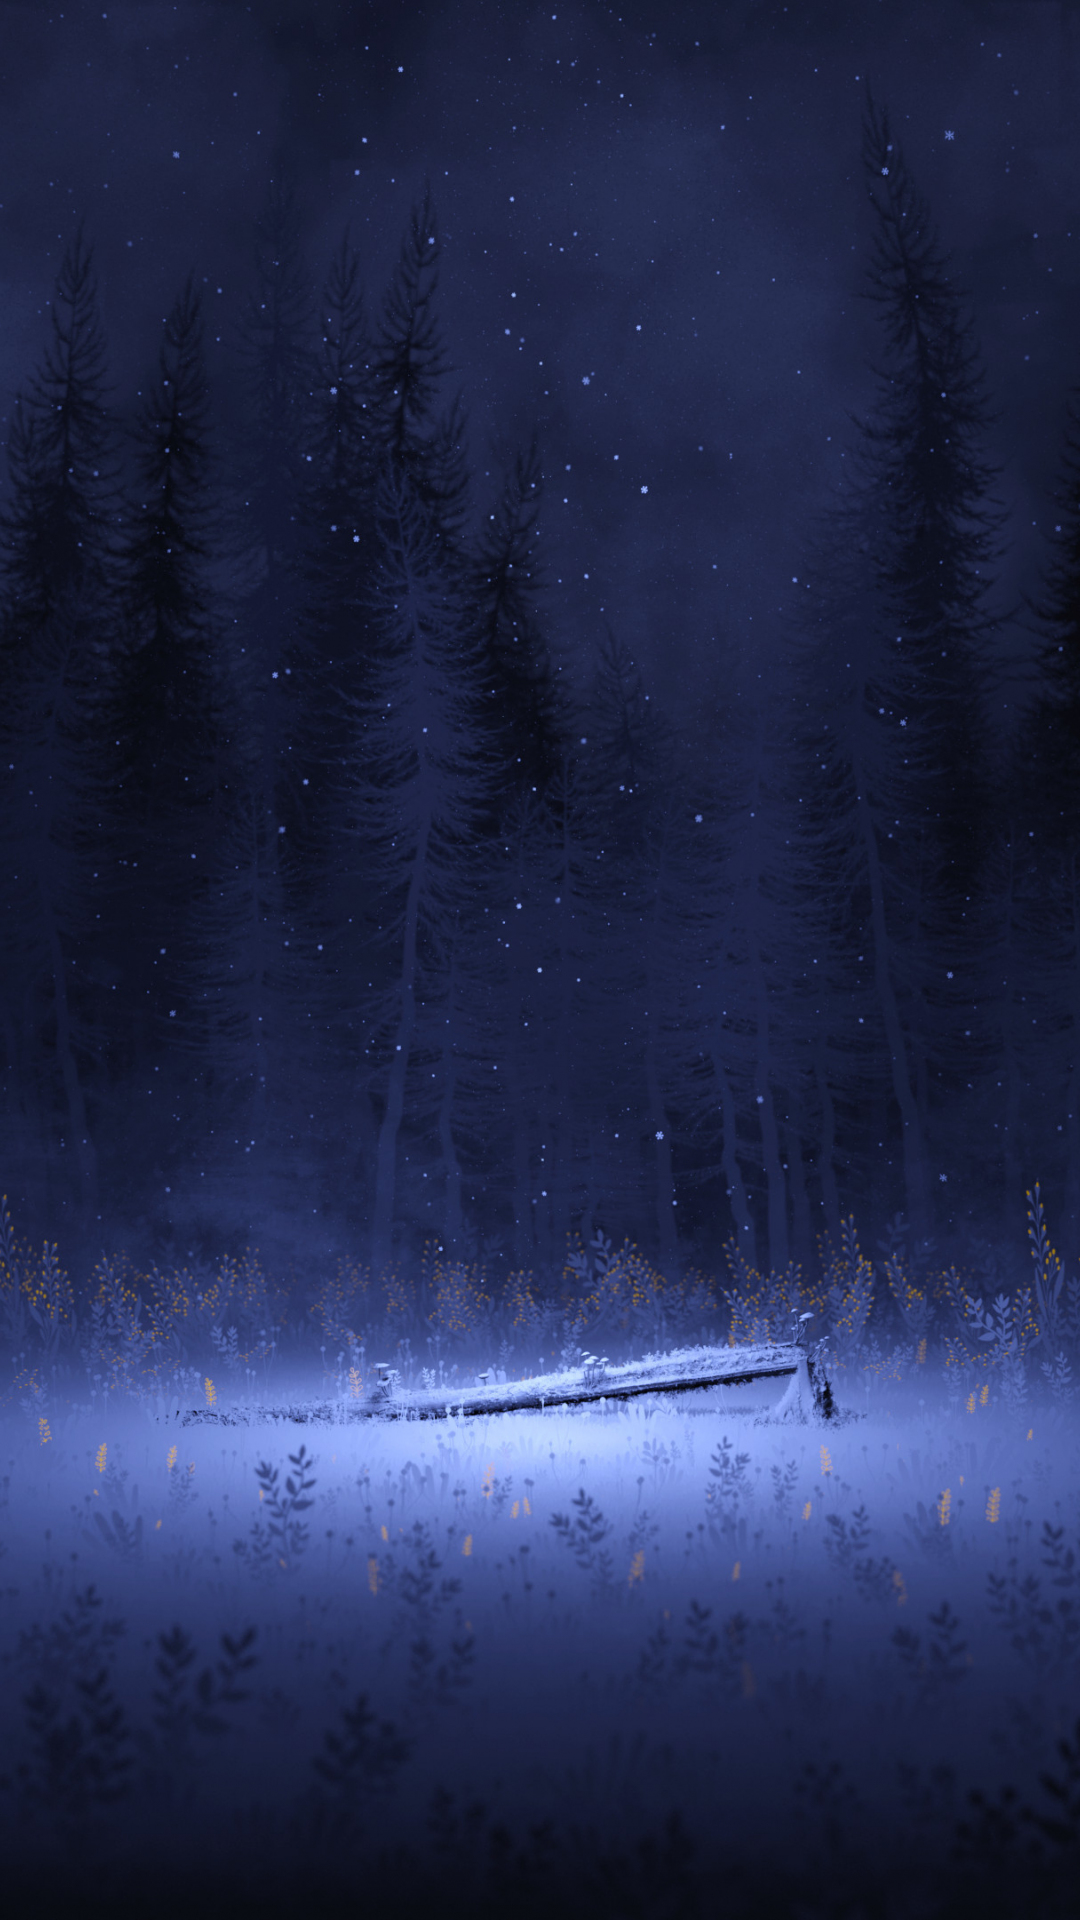 Download wallpaper 1080x1920 snowfall of winter night, meadow, art, 1080p wallpaper, samsung galaxy s s note, sony xperia z, z z z htc one, lenovo vibe, google pixel oneplus honor